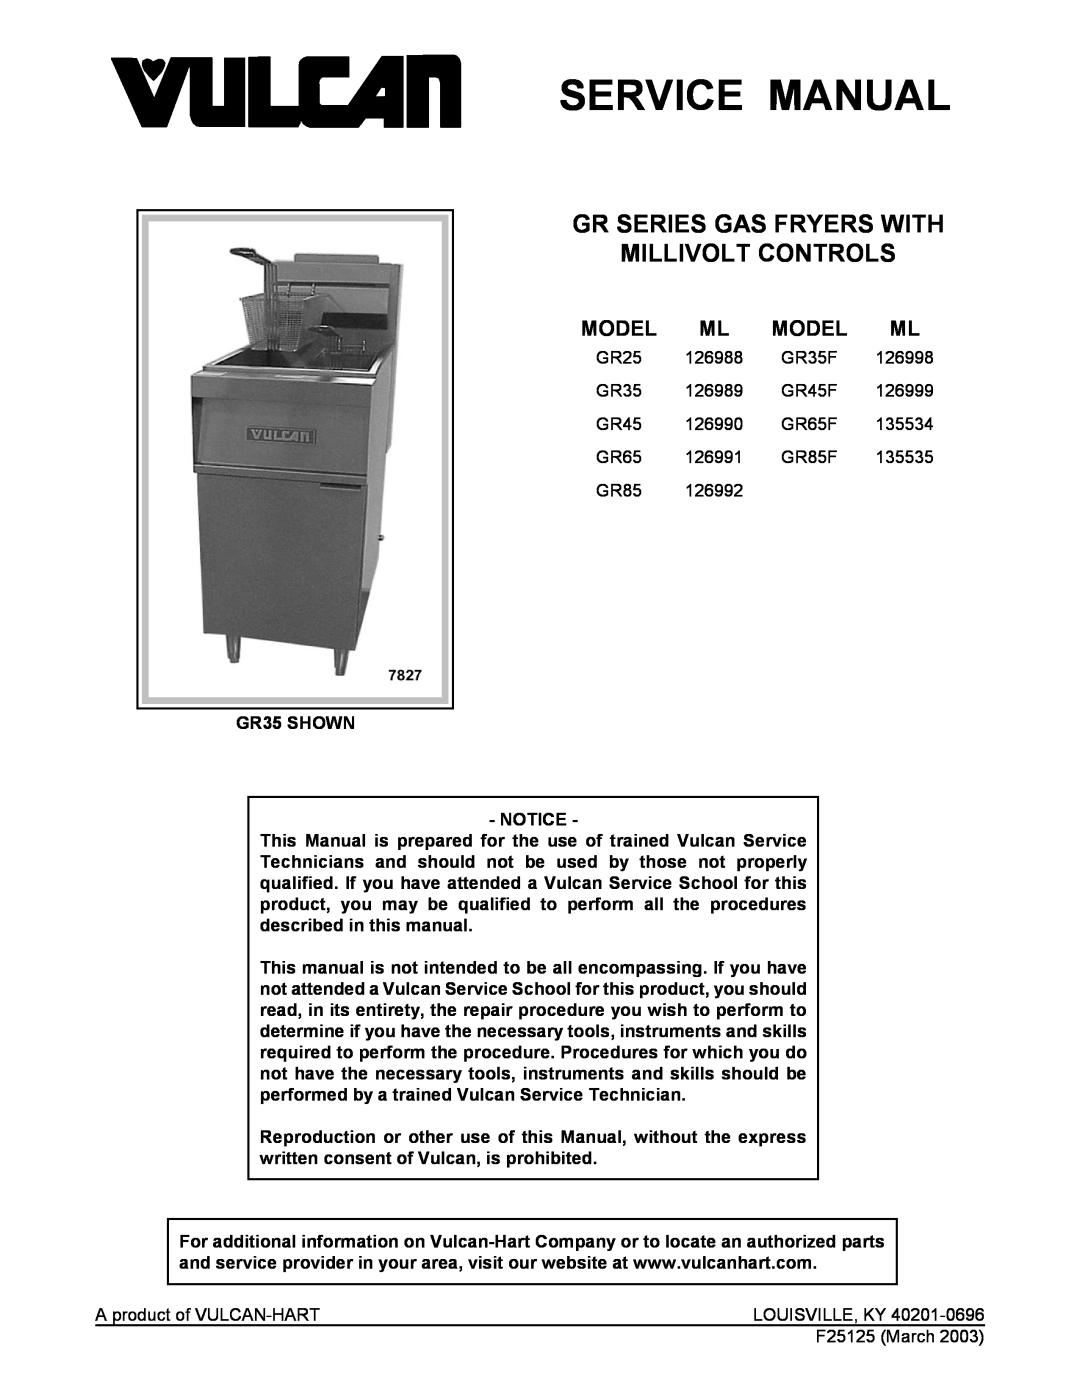 Vulcan-Hart GR85F, GR65F, GR35F, GR45F, GR25 service manual Gr Series Gas Fryers With Millivolt Controls, Model 